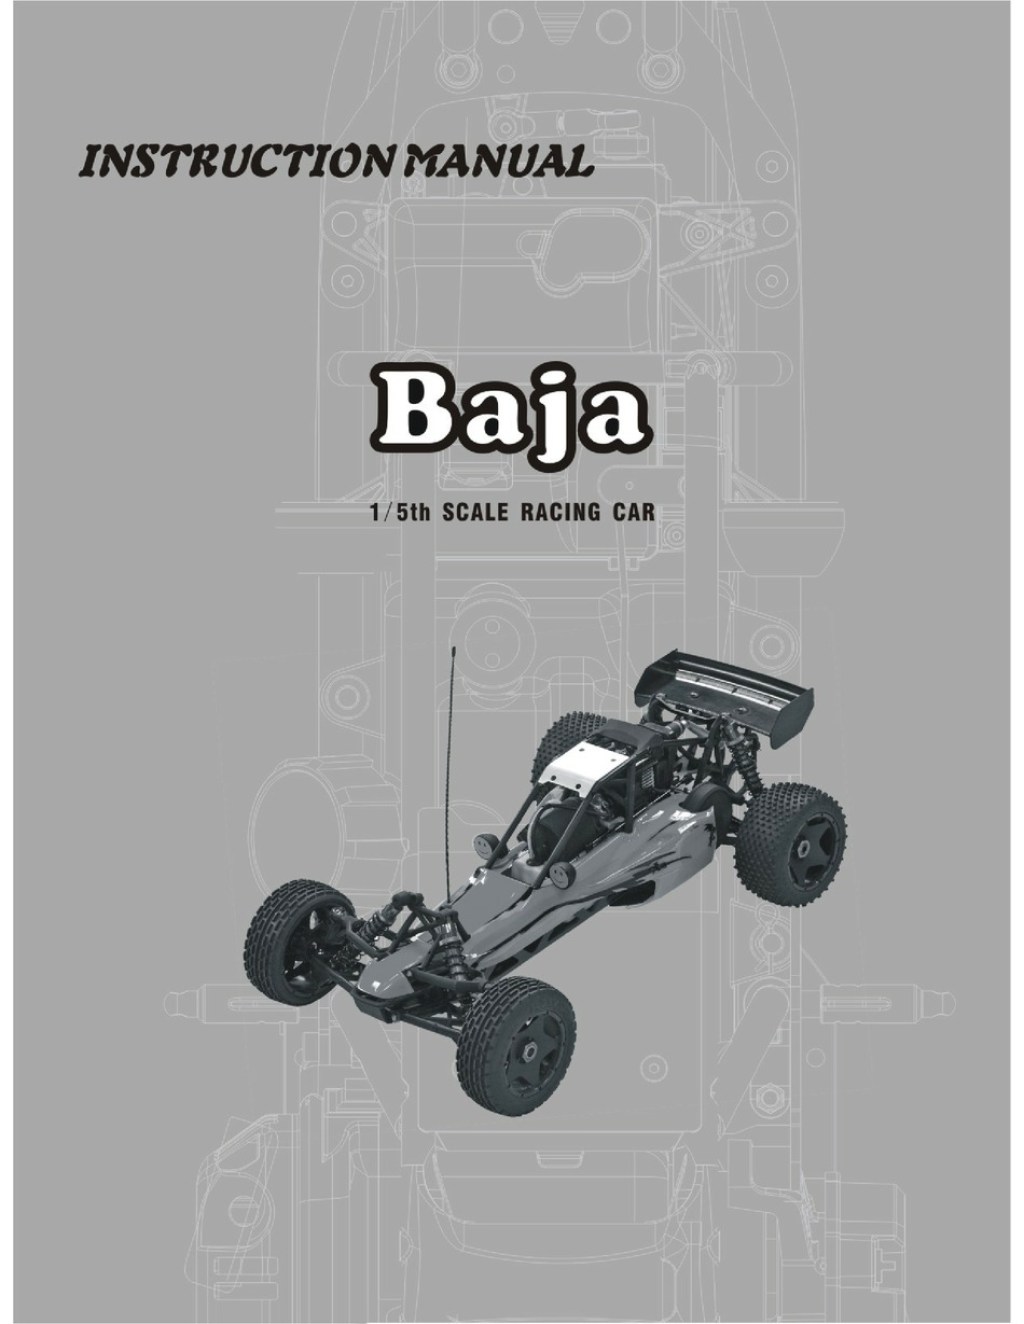 Picture of: BAJA ROVAN B INSTRUCTION MANUAL Pdf Download  ManualsLib